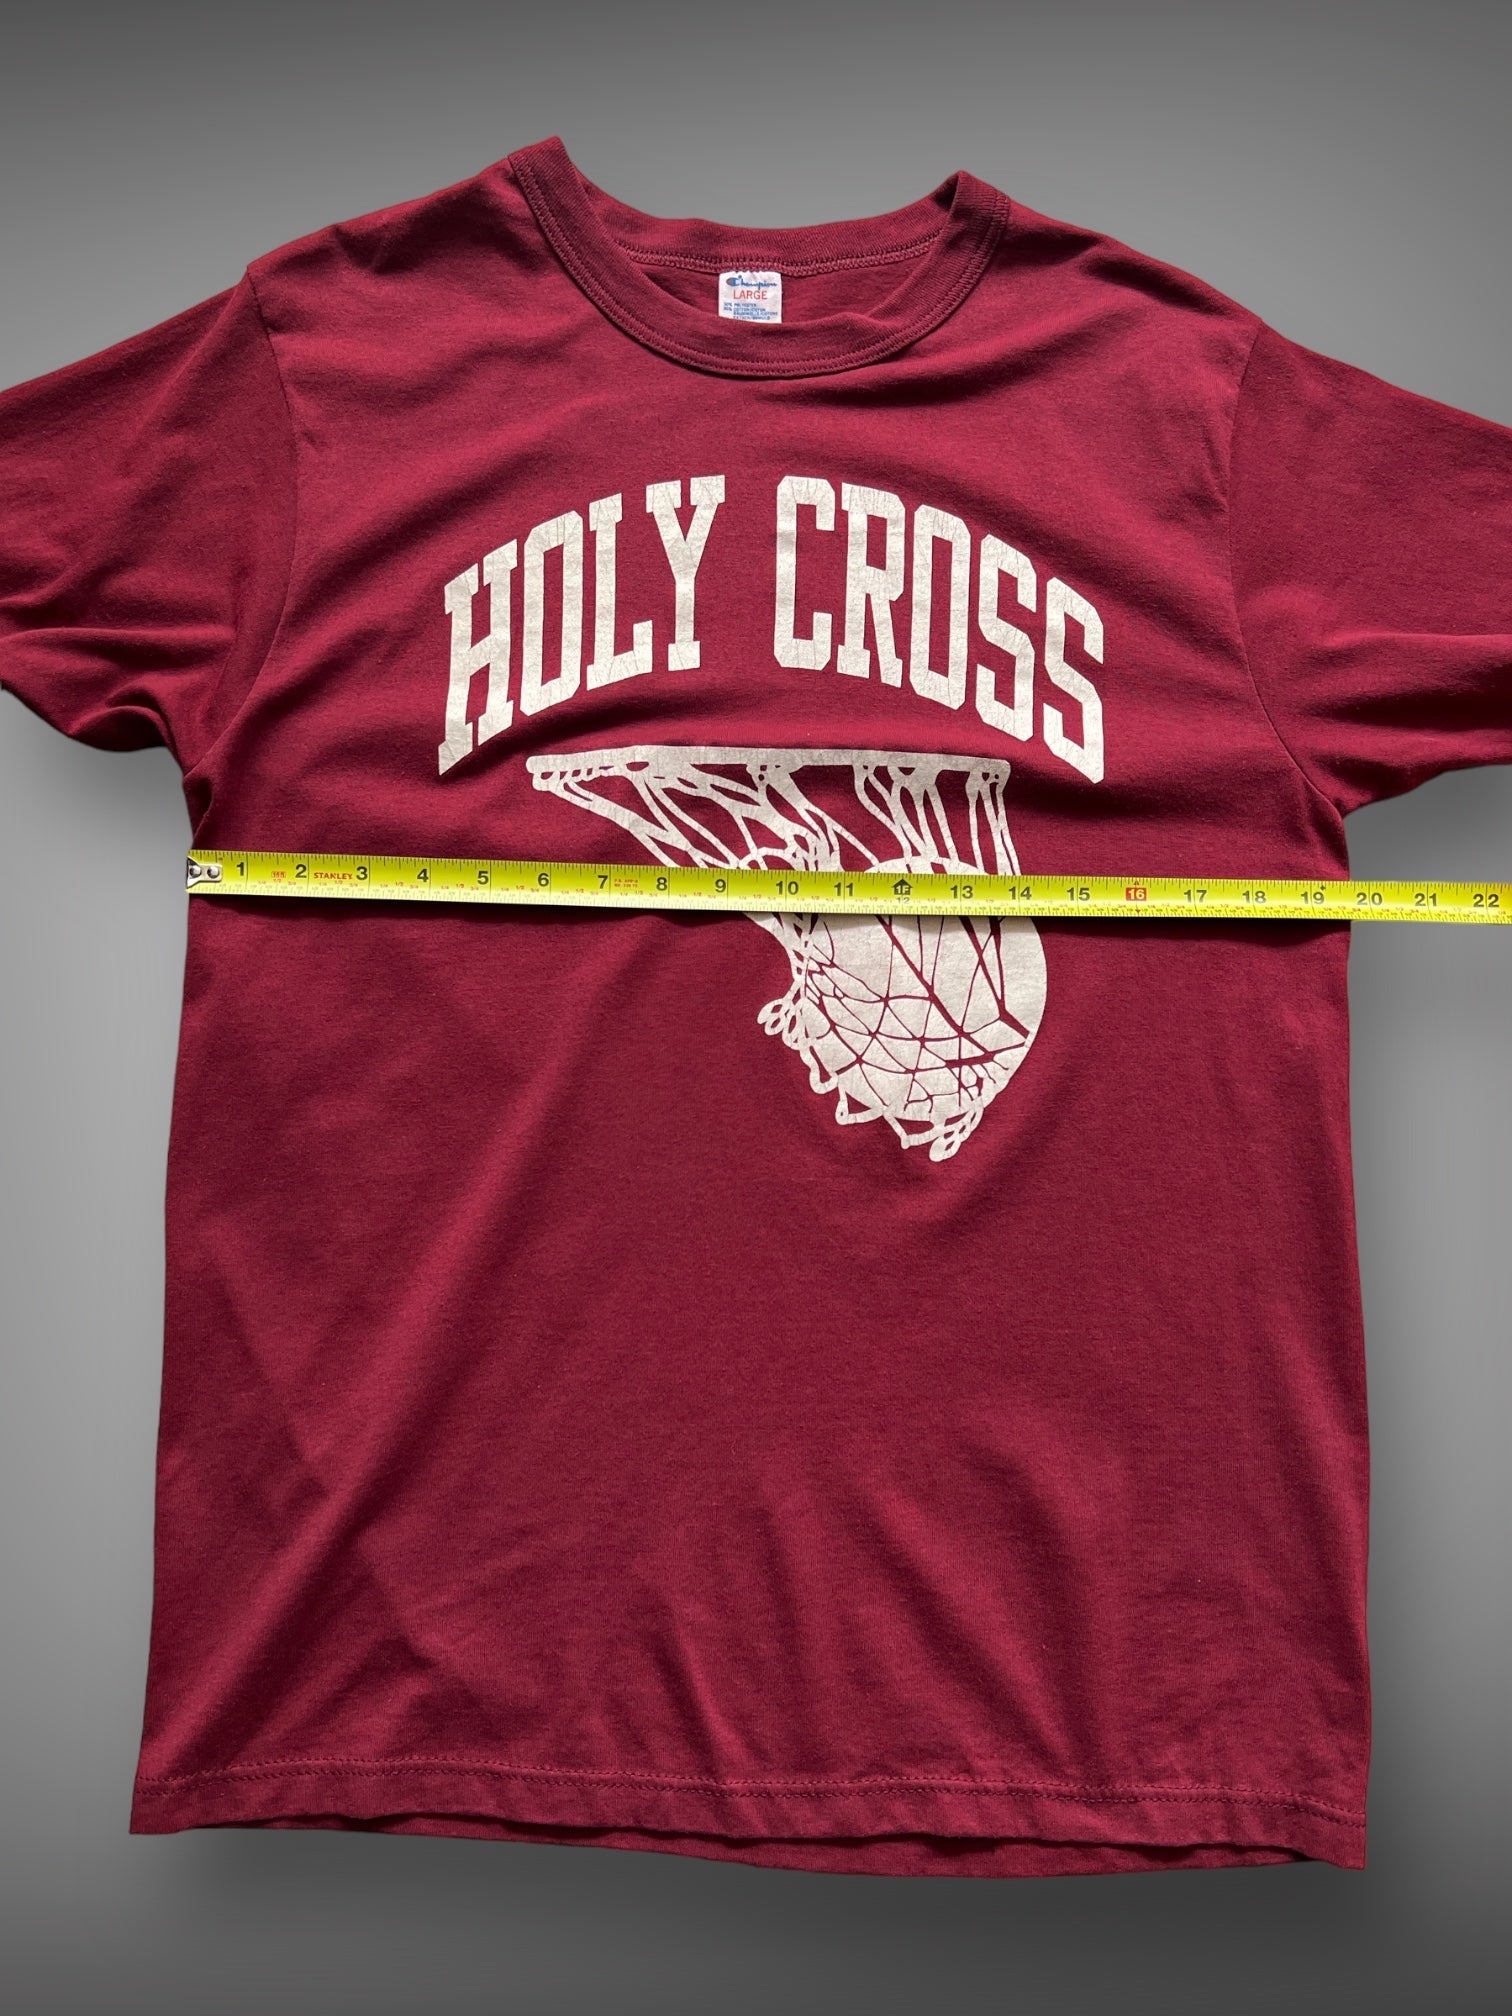 90s Champion Holy Cross t shirt fits M